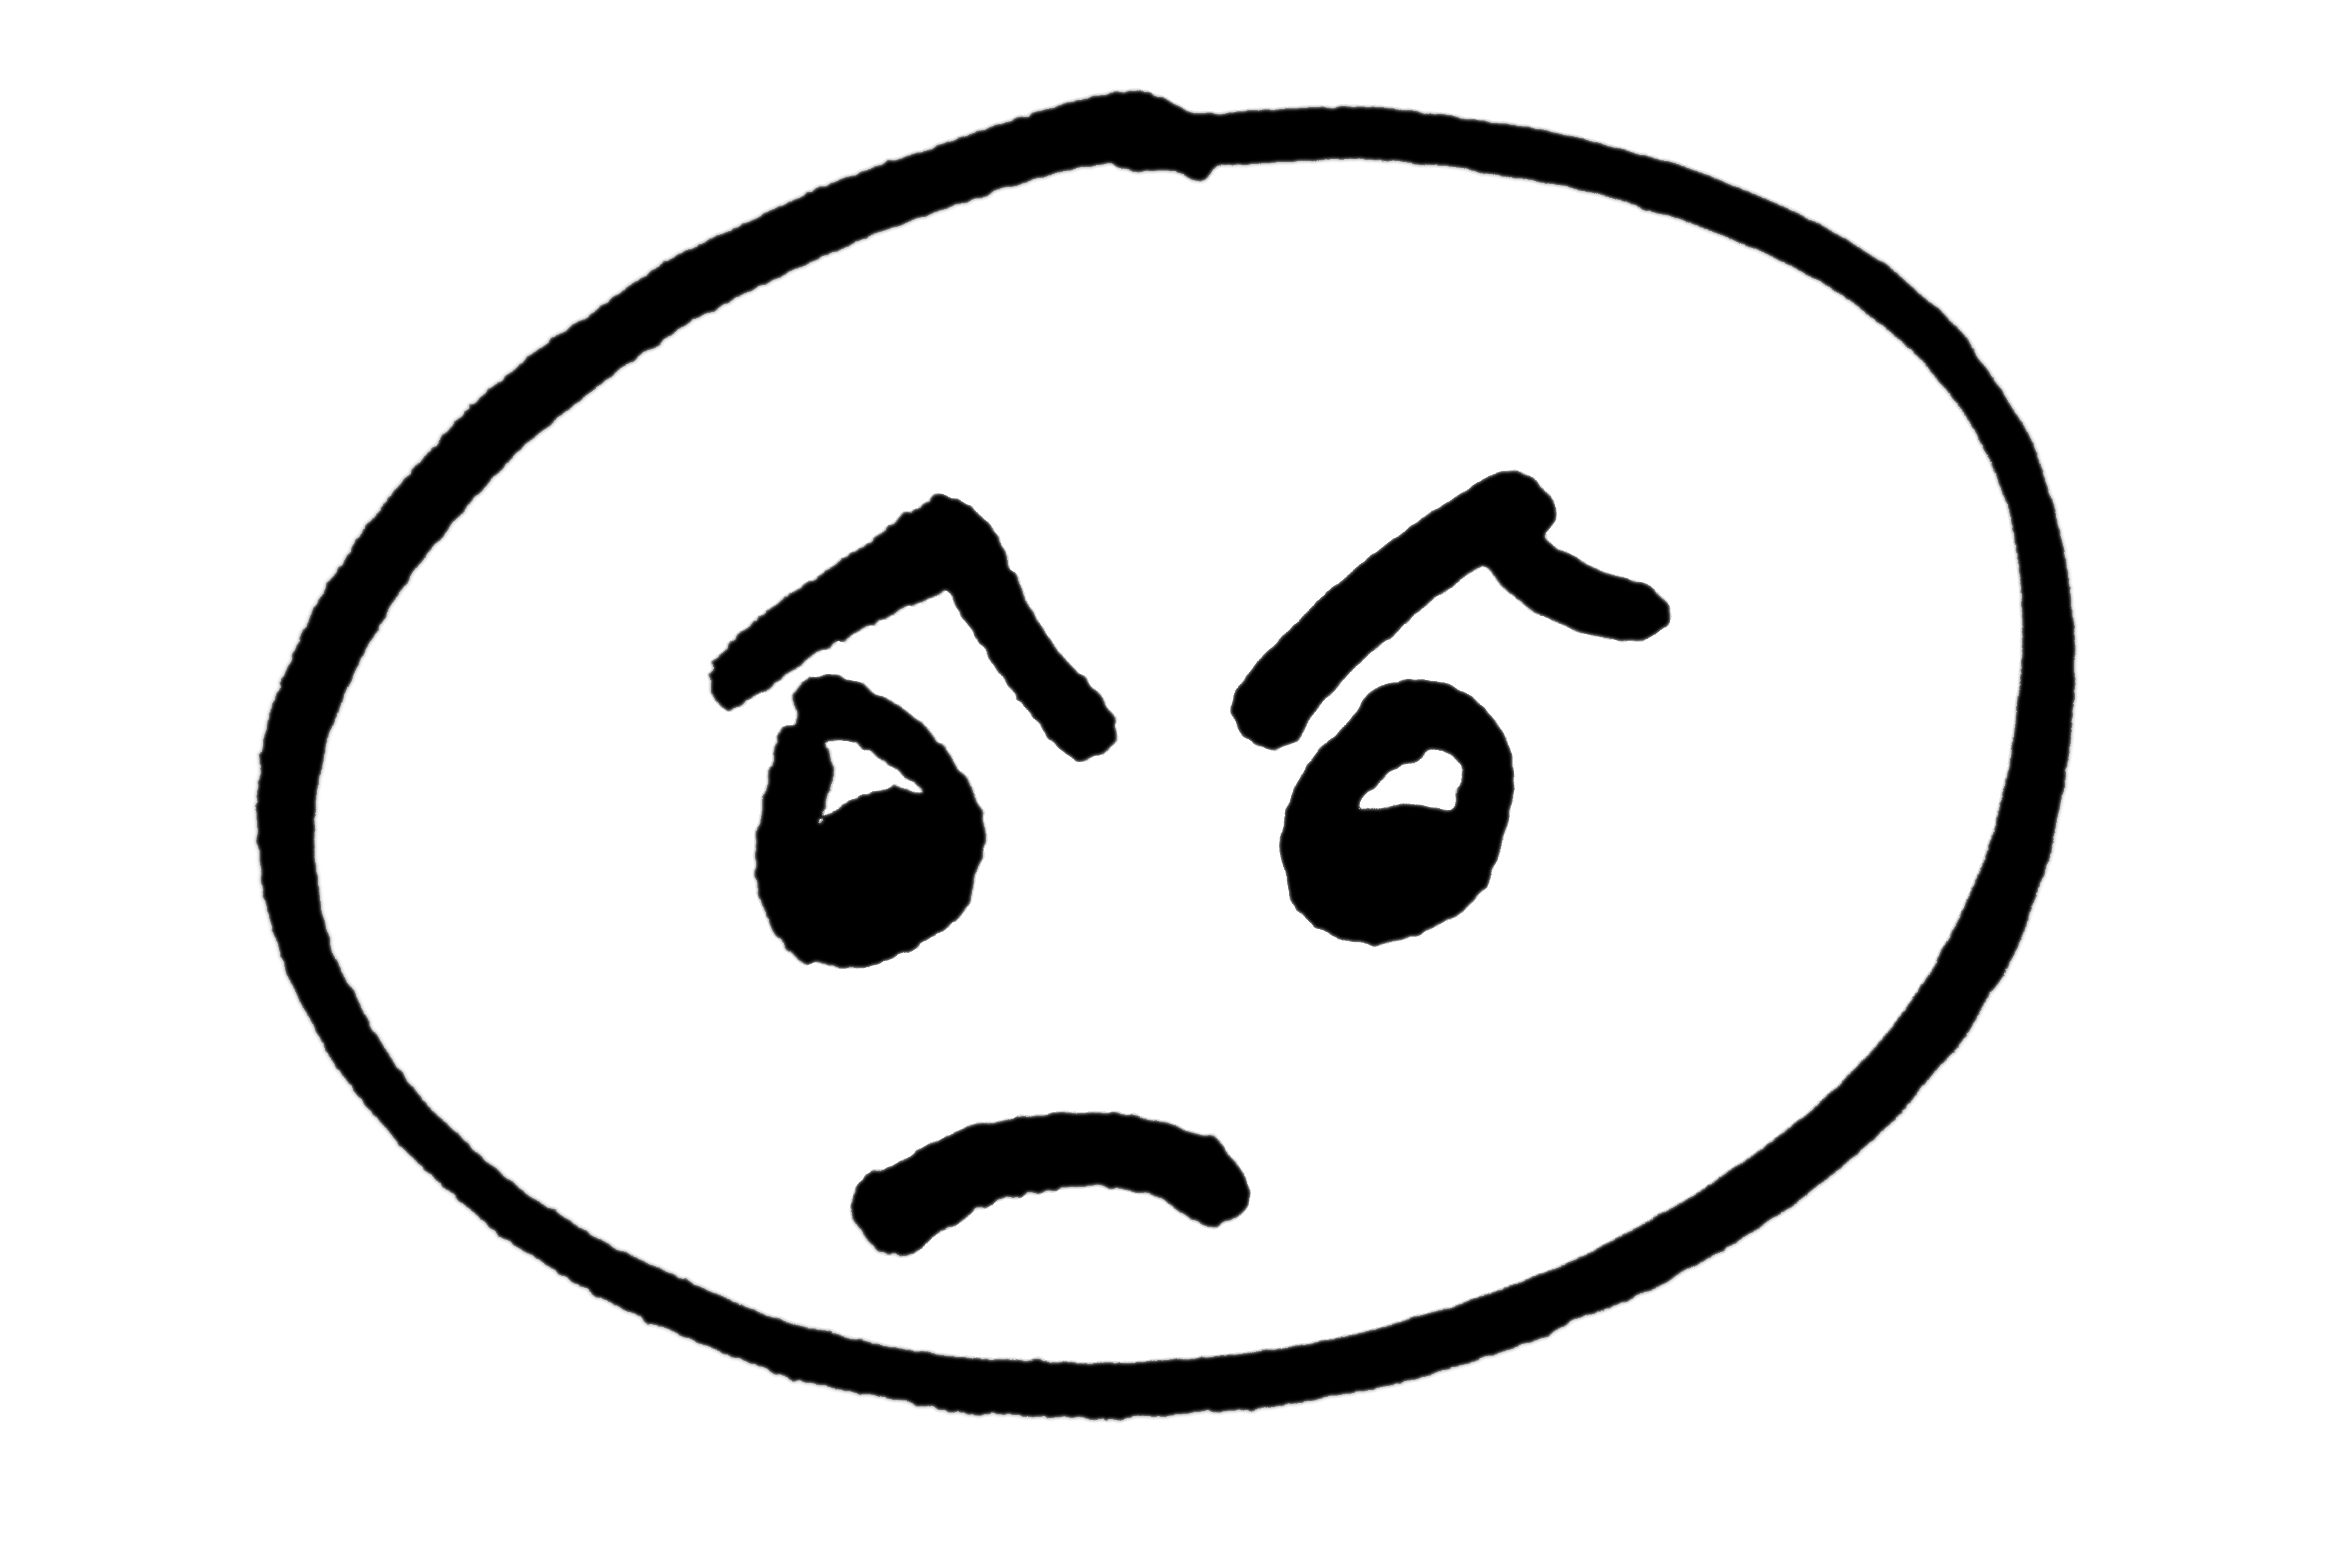 Sad Face Clip Art to Download - dbclipart.com